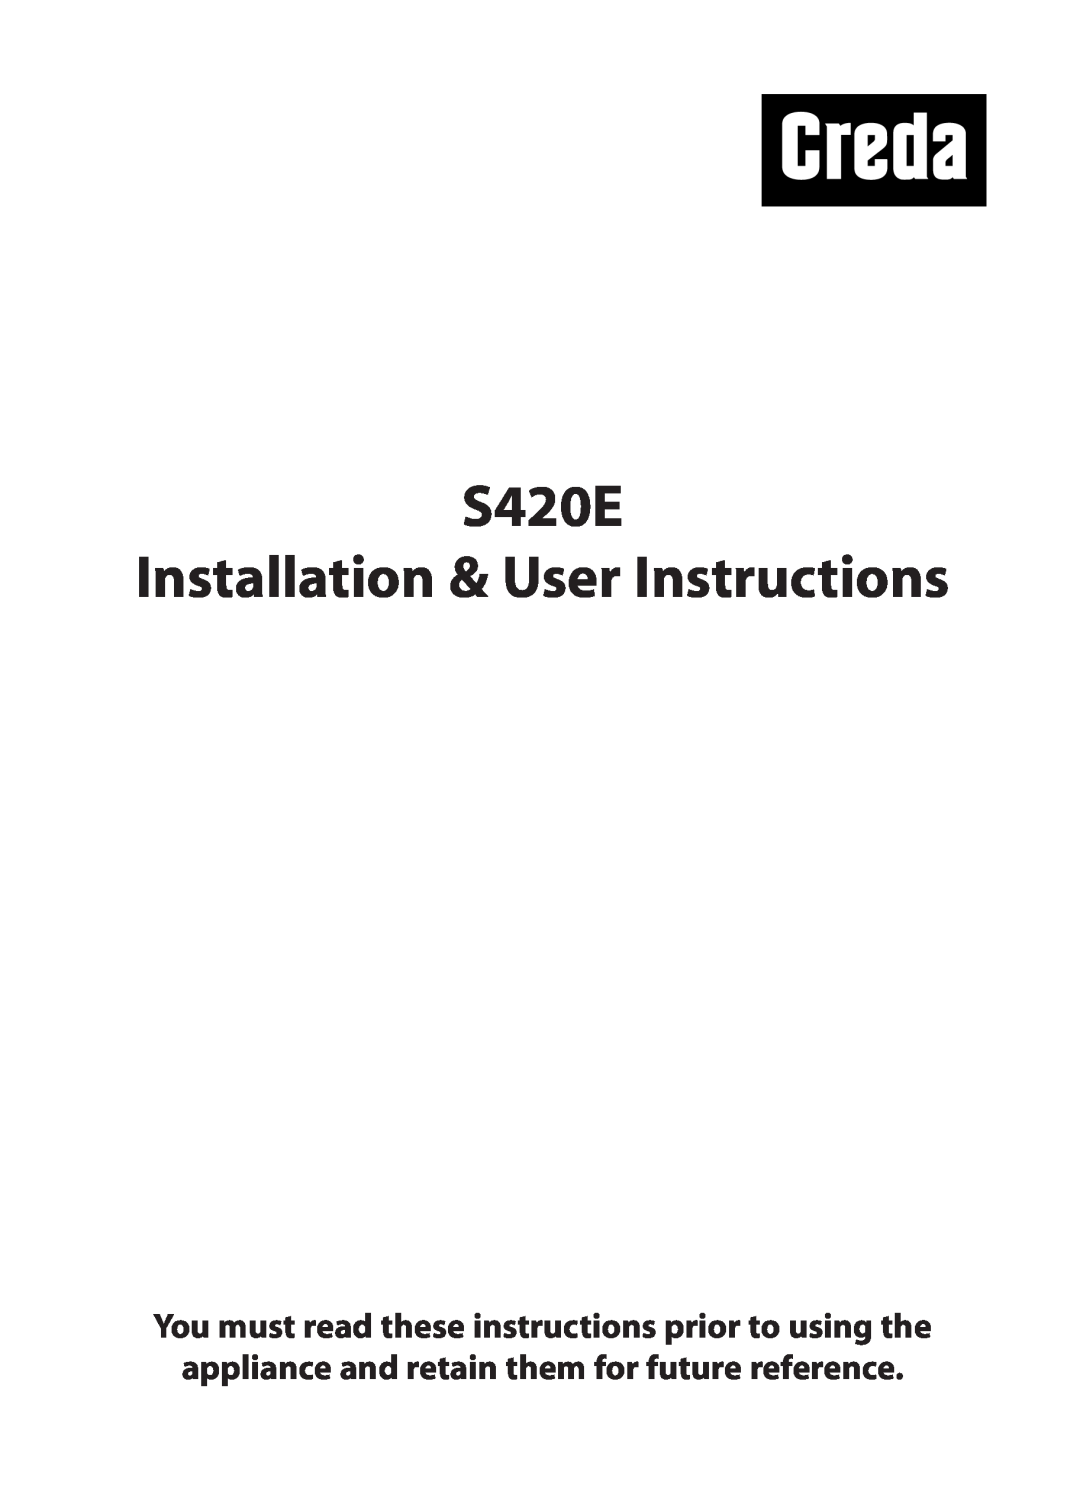 Creda manual S420E Installation & User Instructions 